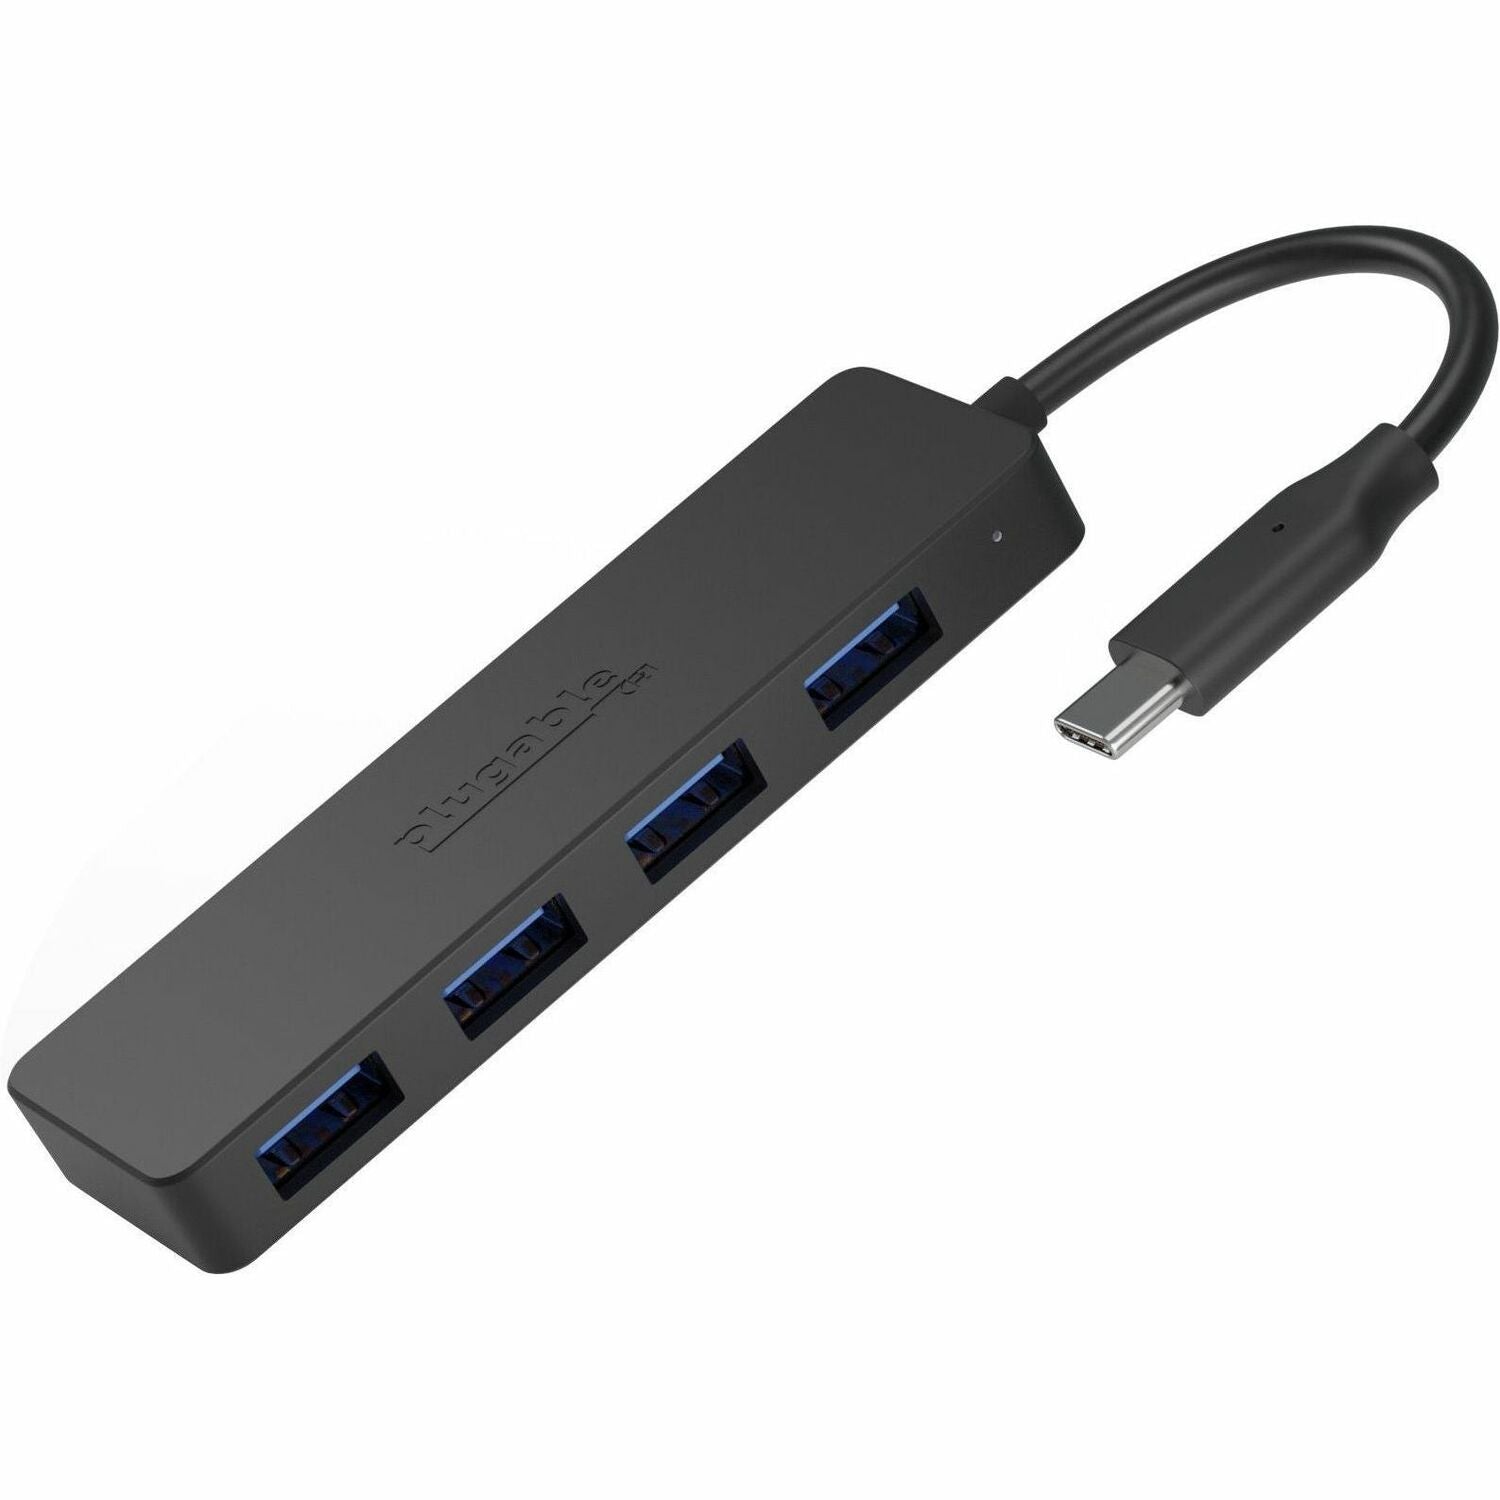 Plugable USB C to USB Adapter Hub, 4 Port USB 3.0 Hub, USB Splitter for Laptop - USBC-HUB4A